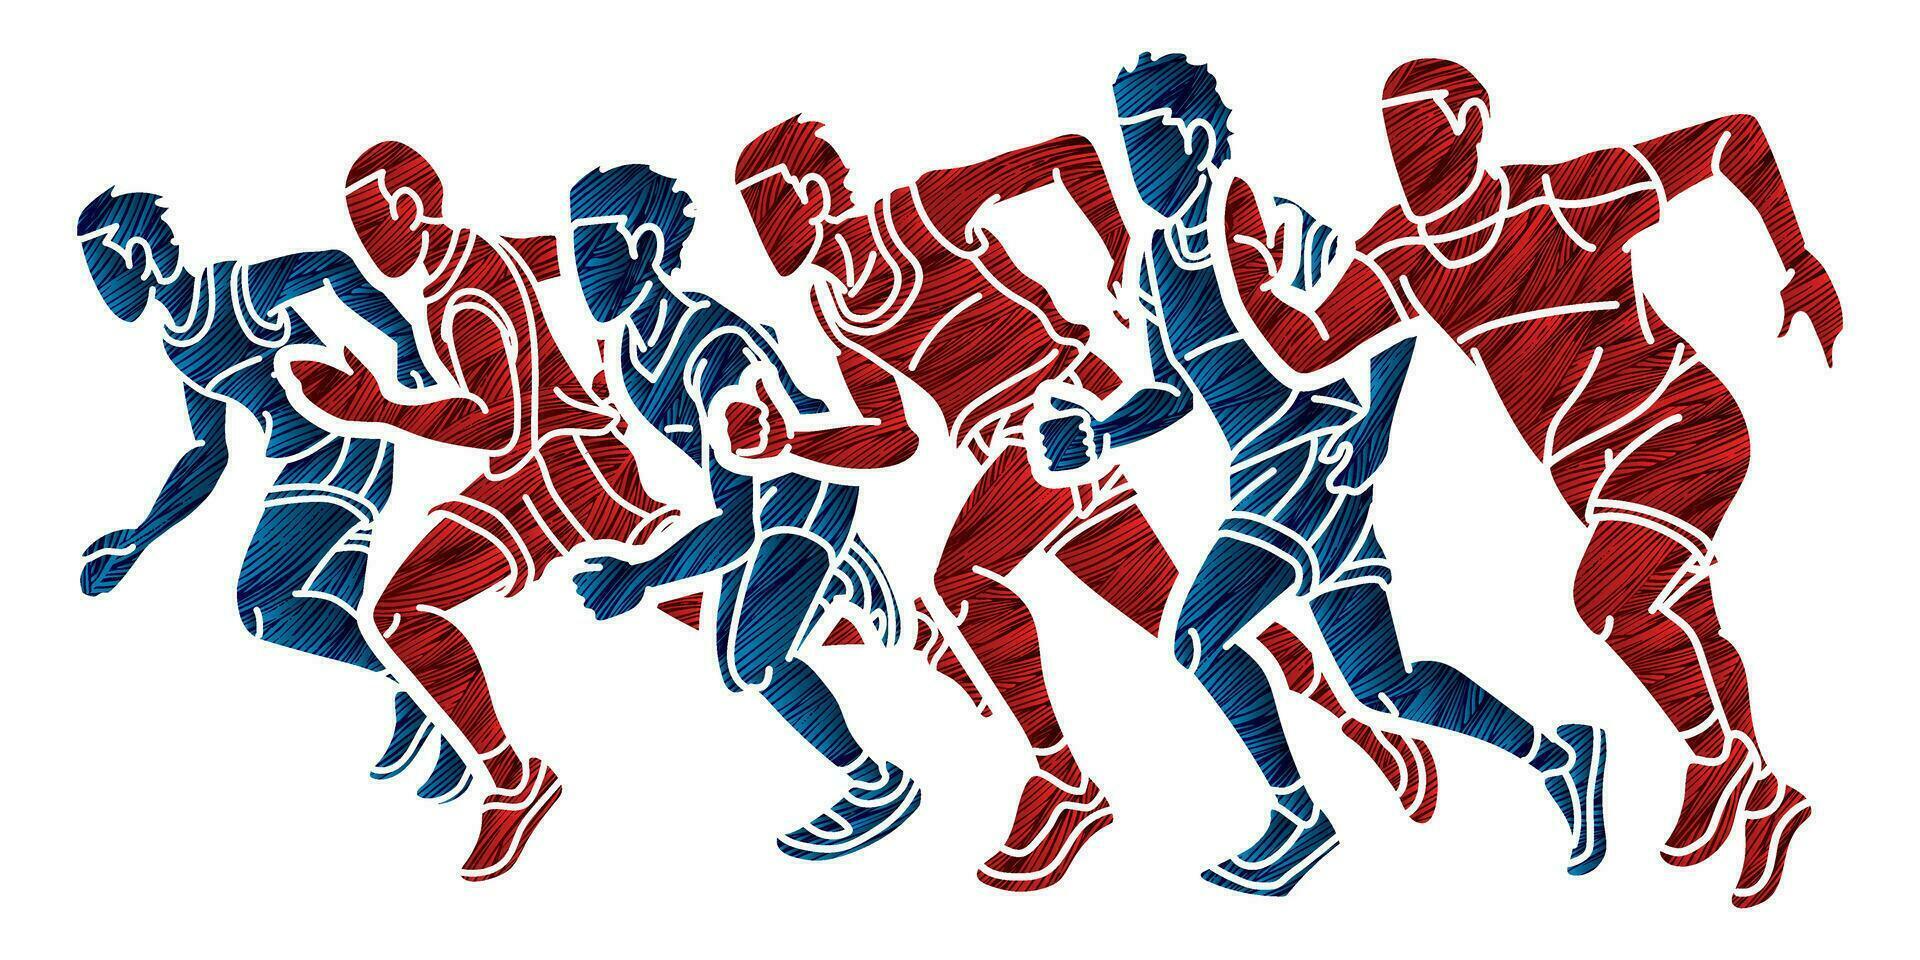 groep van loper actie begin rennen mannen rennen samen tekenfilm sport grafisch vector